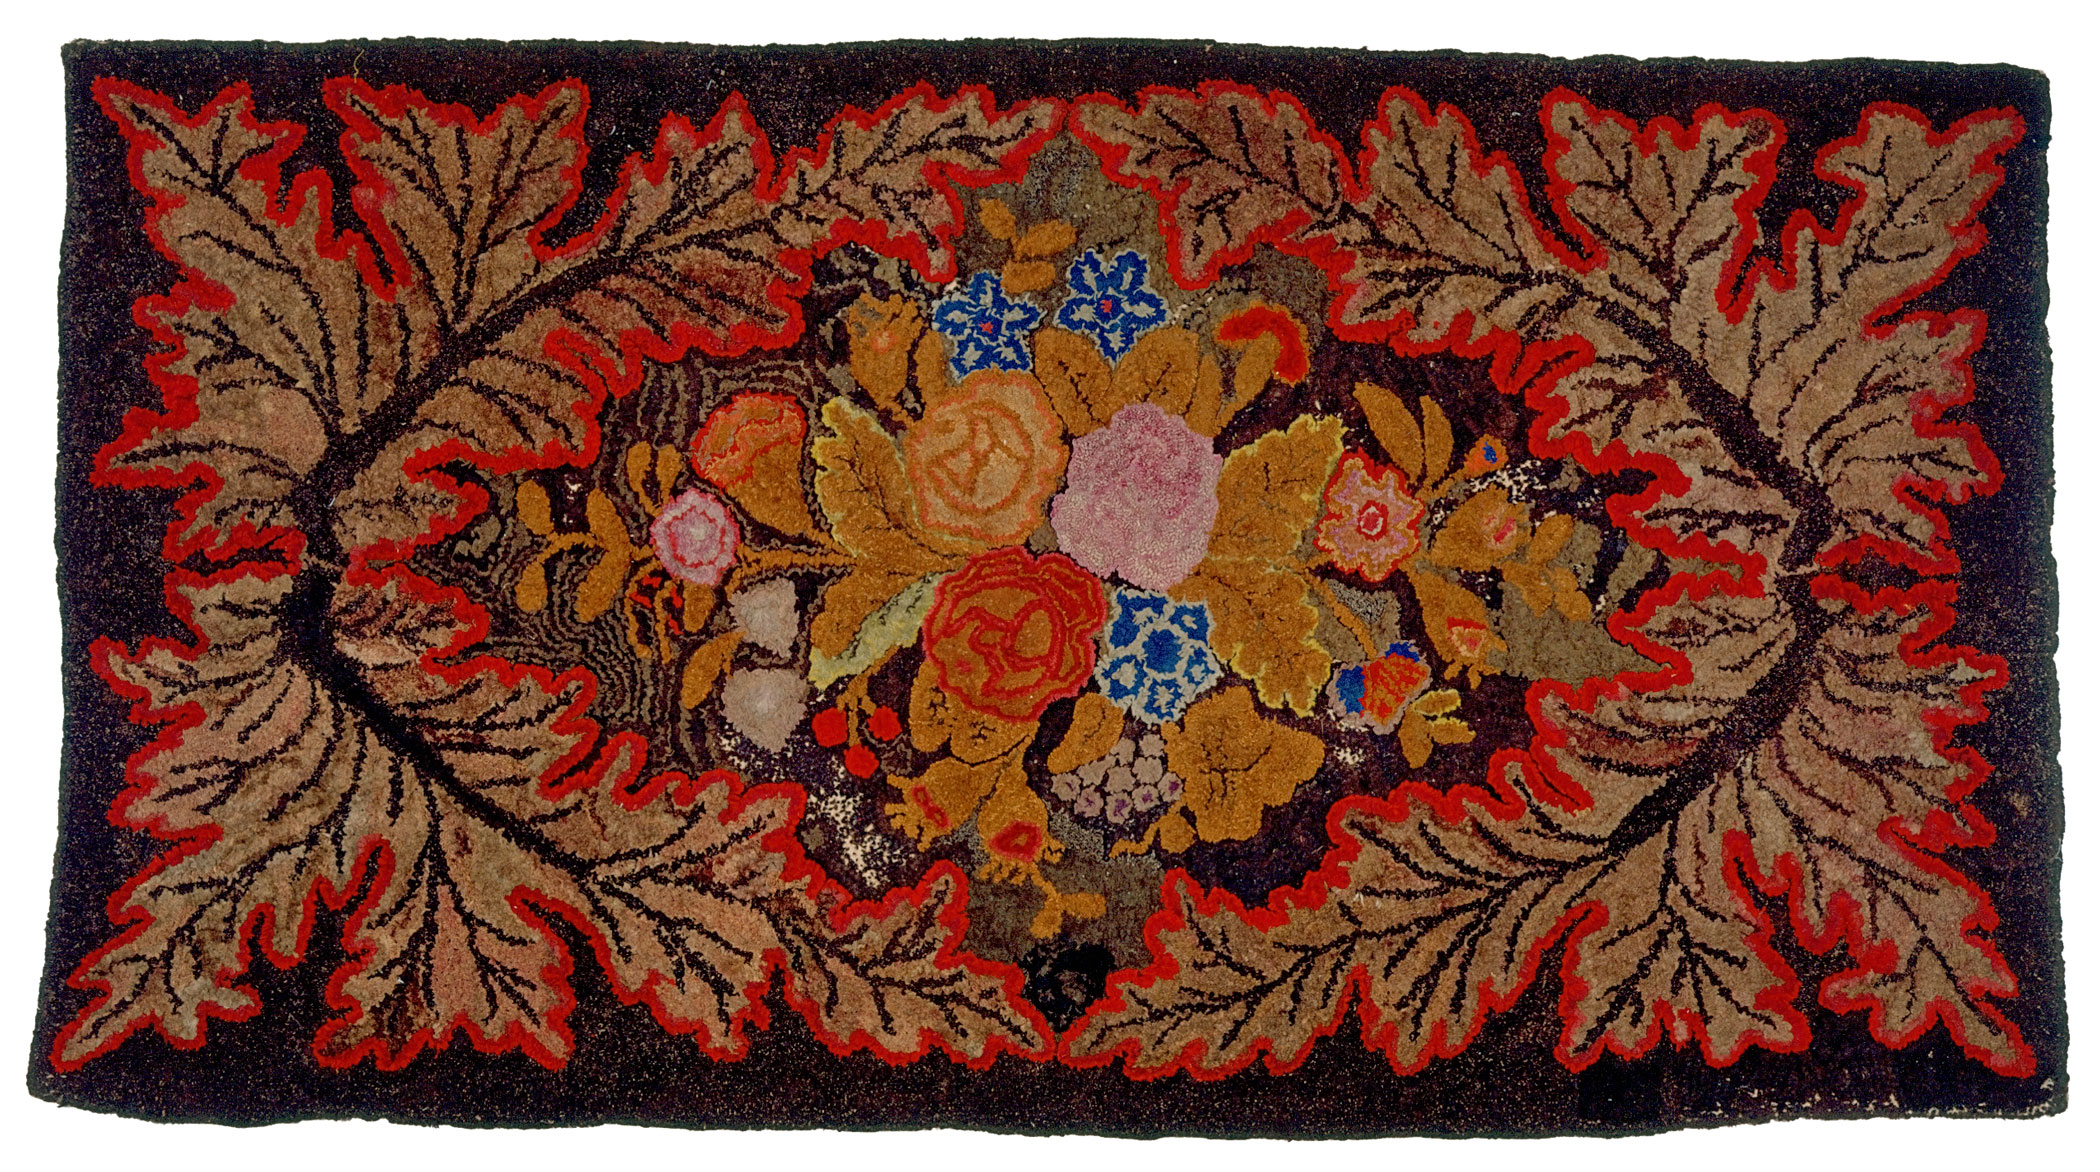 Hooked rug, Waldoboro, Maine, c. 1850–1900